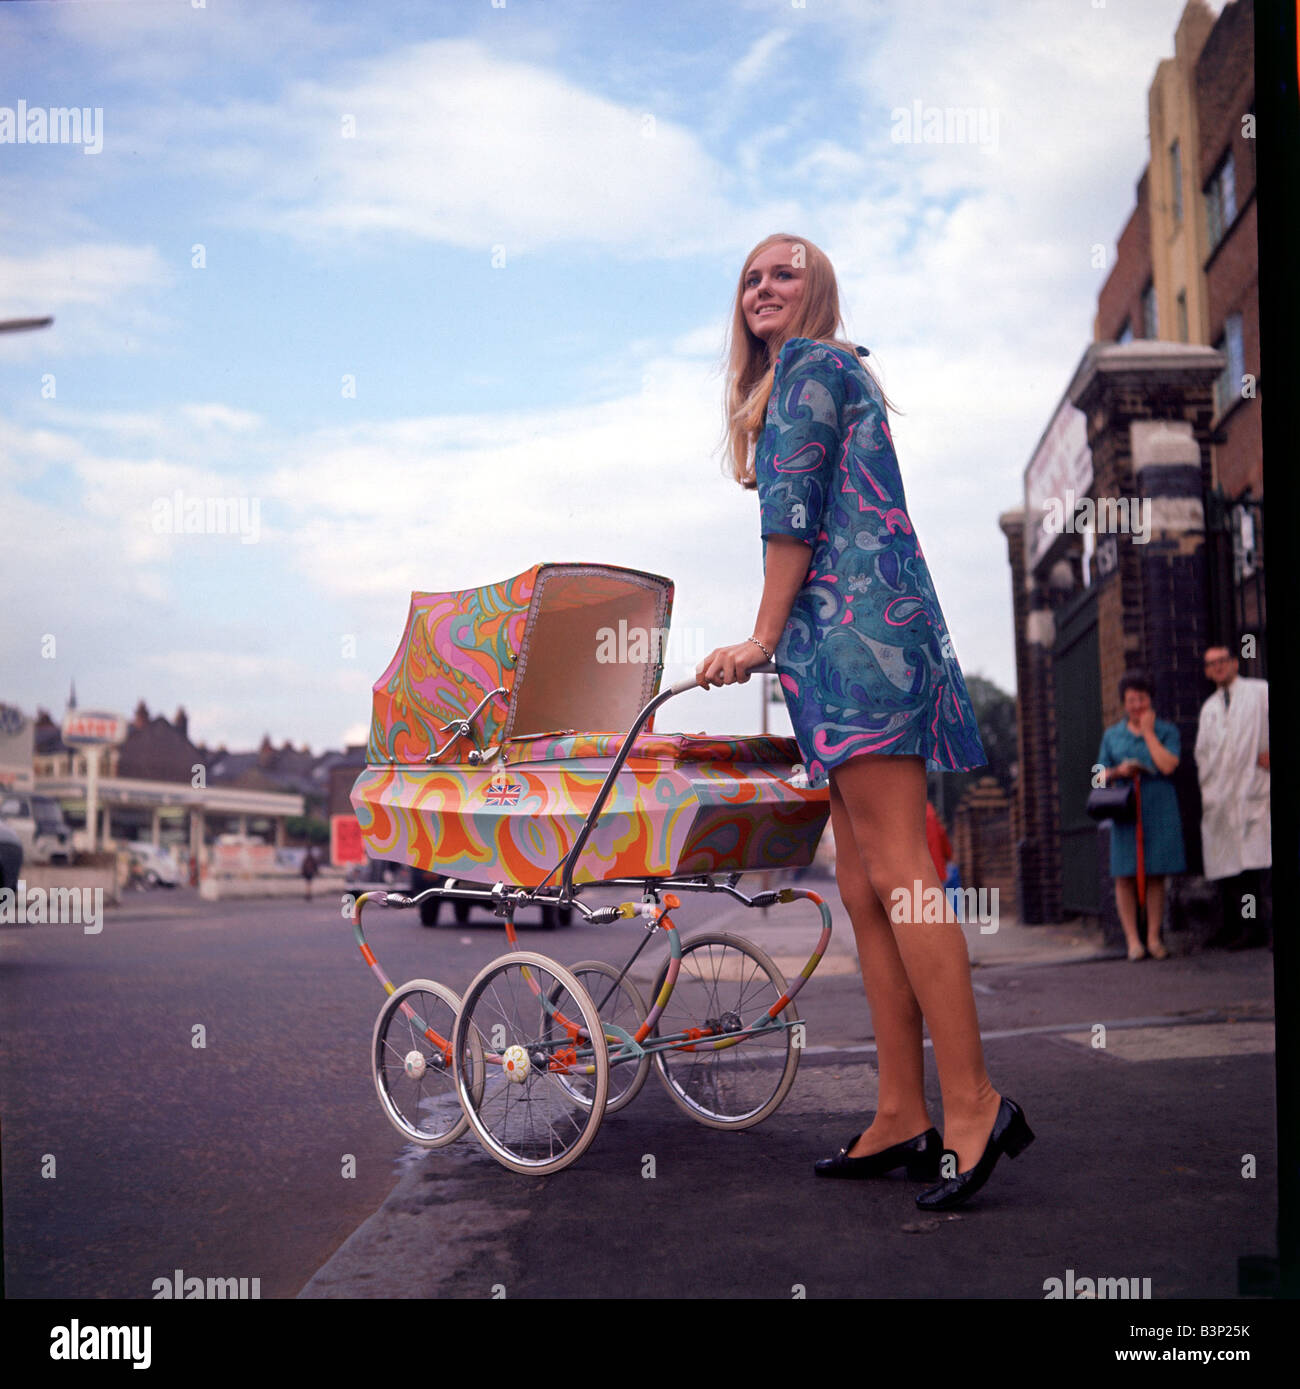 1960 baby stroller